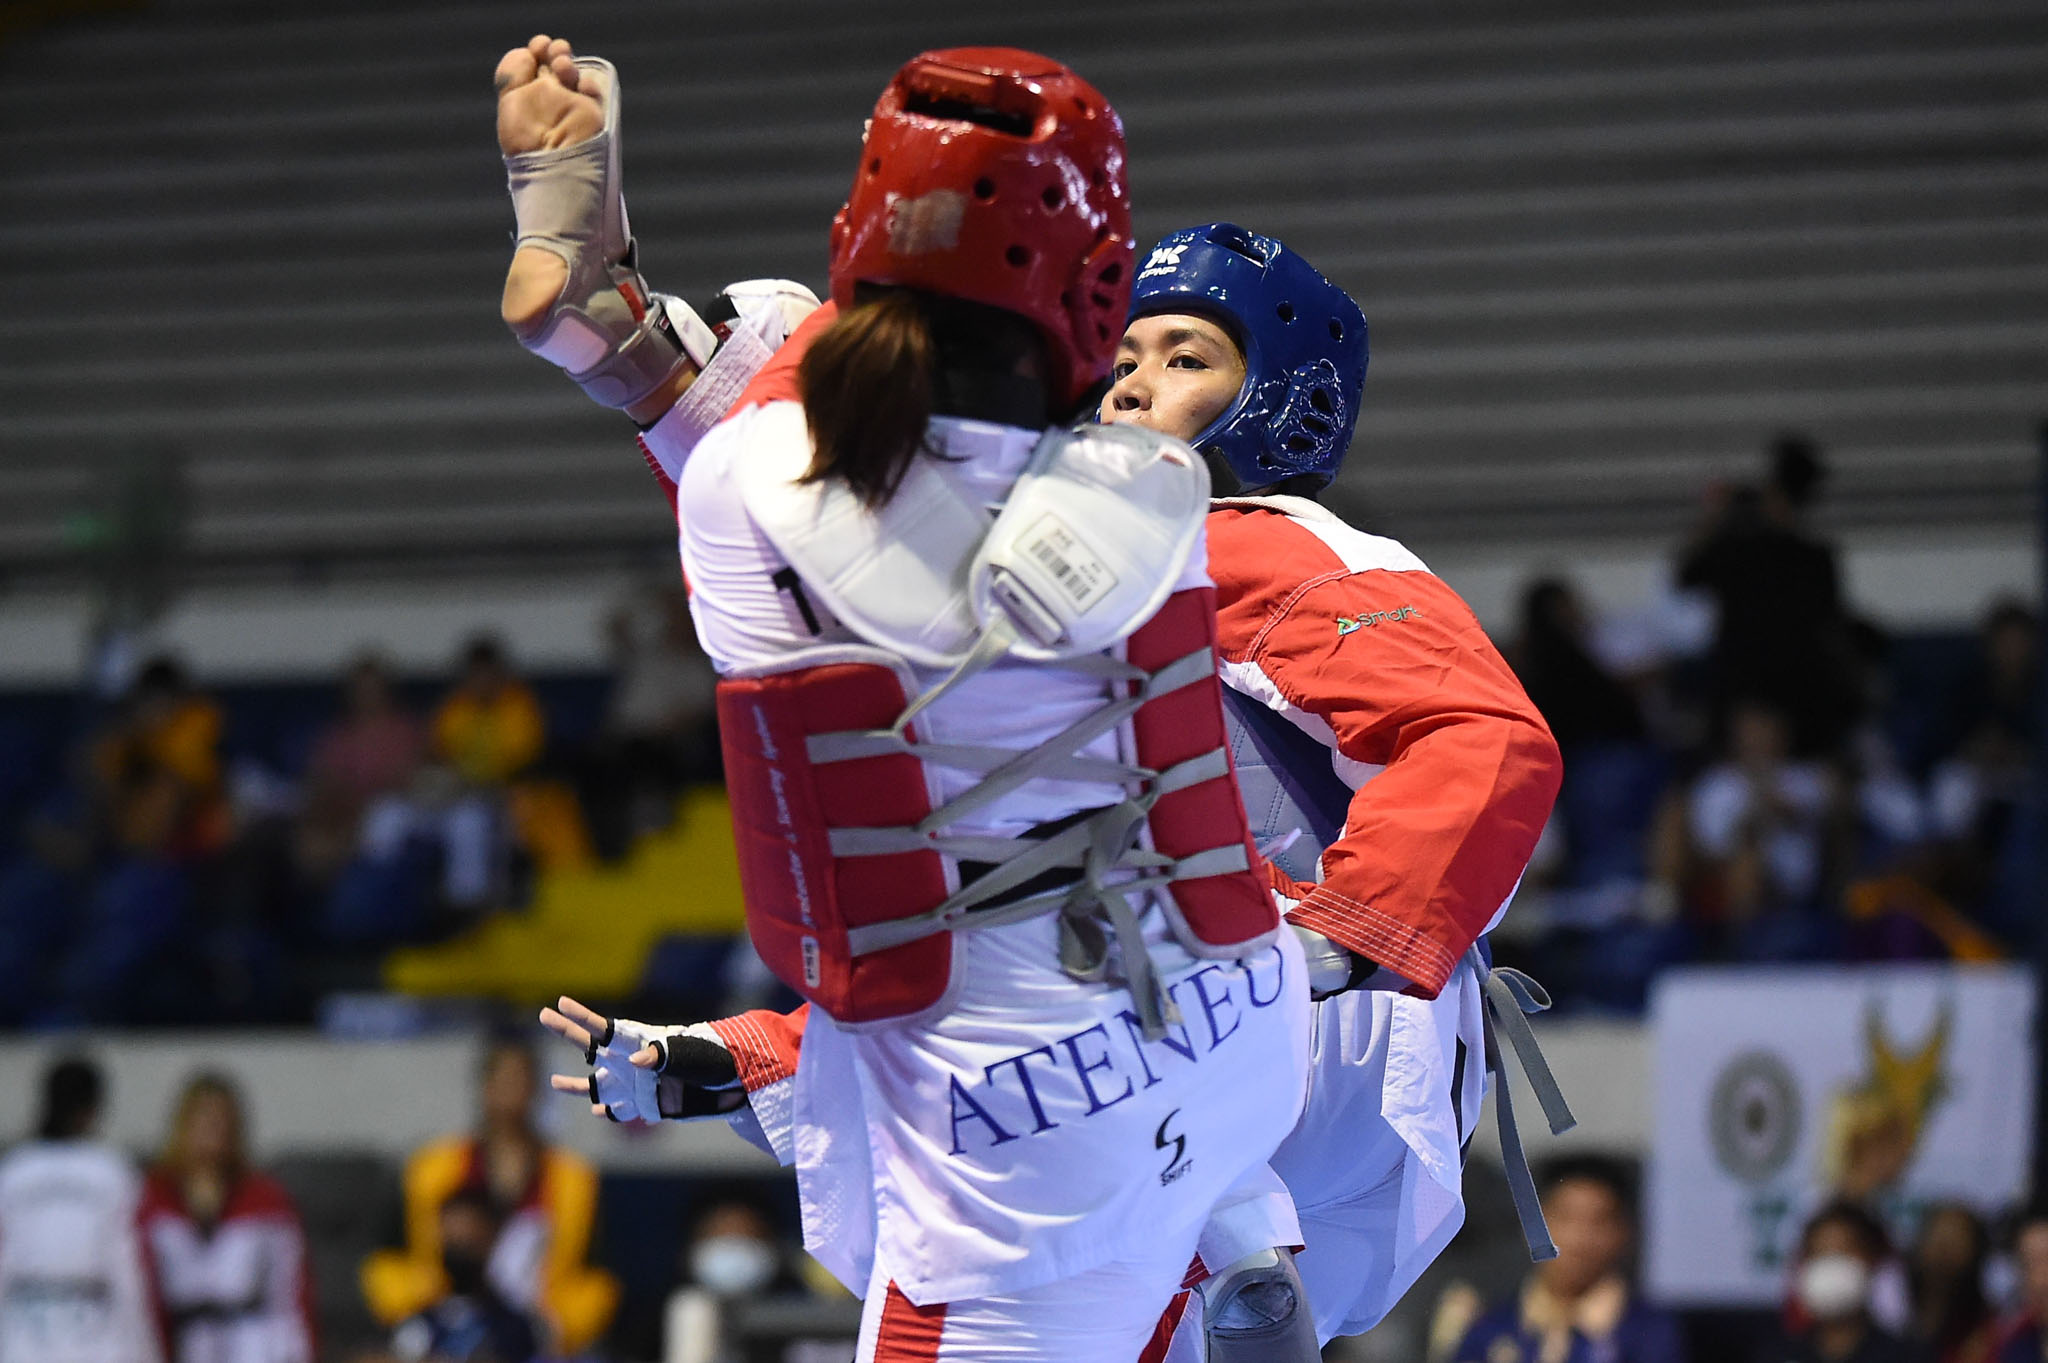 UAAP-85-Taekwondo-Women-NU-MCann-Nicole-2 UAPA 85 CTK: Barbosa a class above, leads NU to 3-0 slate in title defense ADMU DLSU FEU News NU Taekwondo UAAP UP UST  - philippine sports news